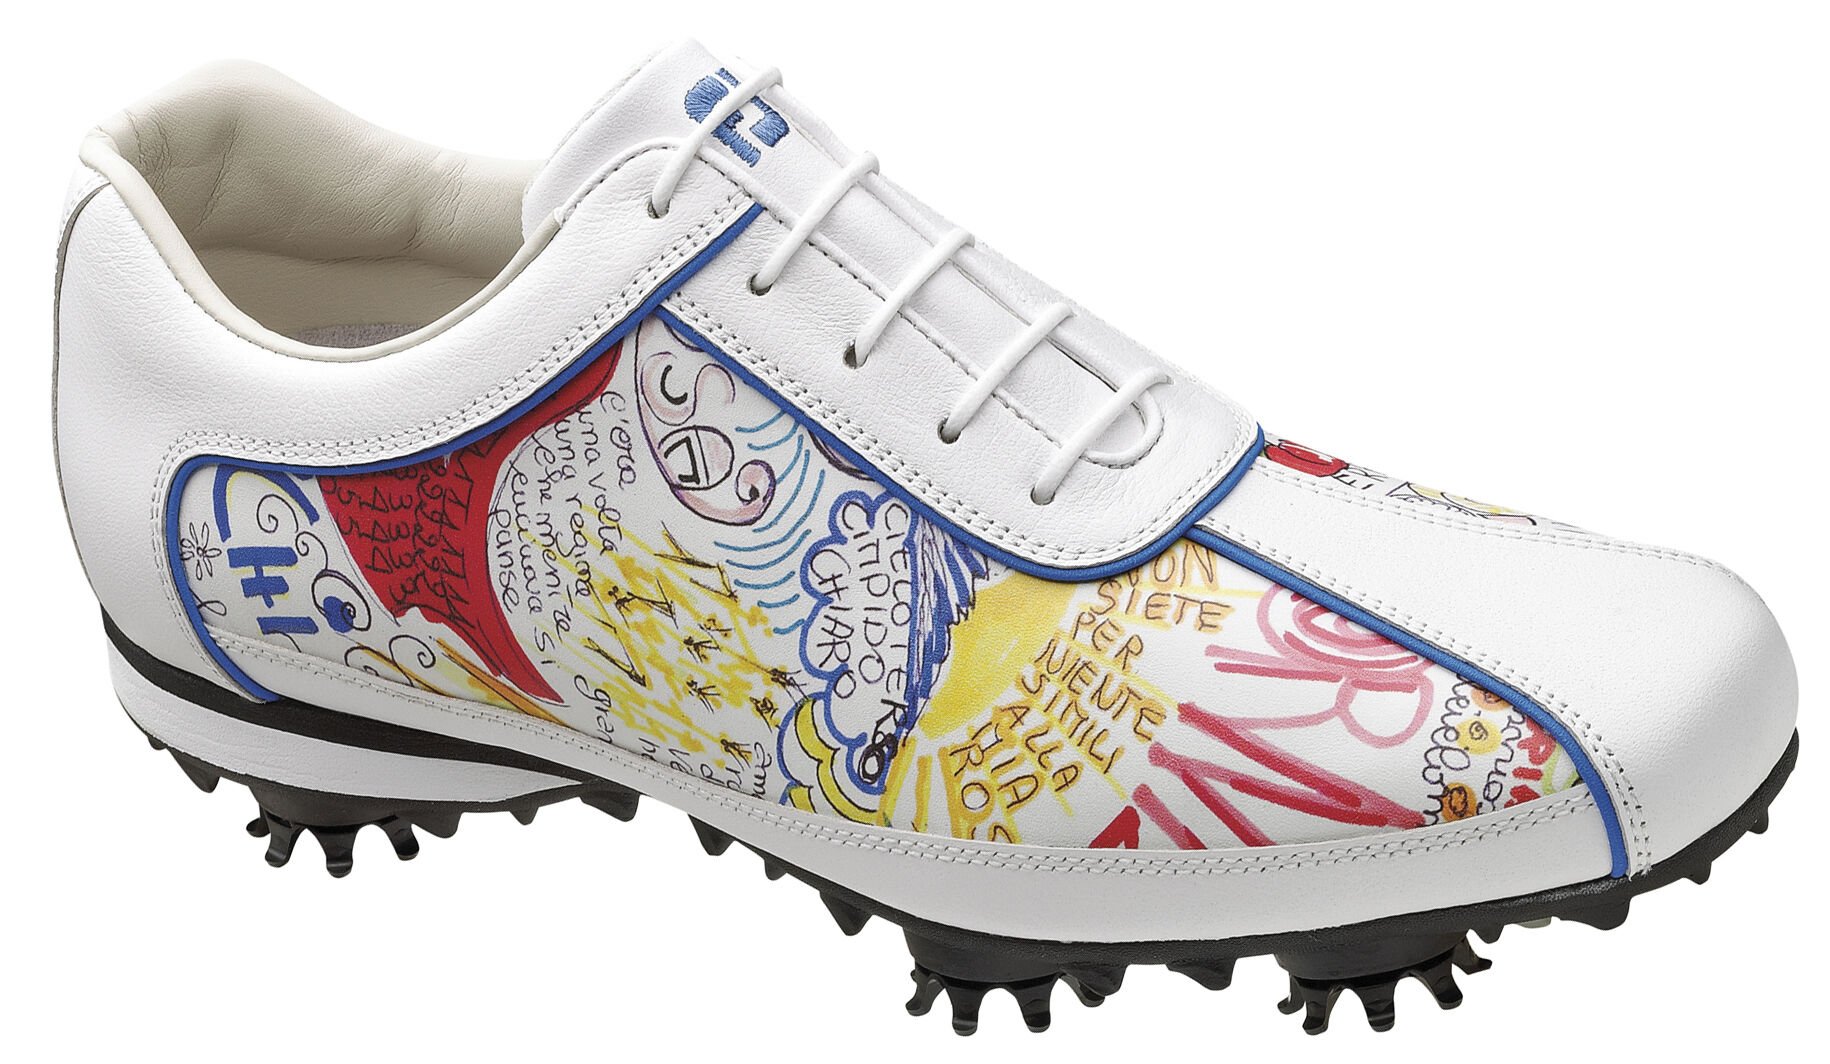 footjoy lopro womens golf shoes